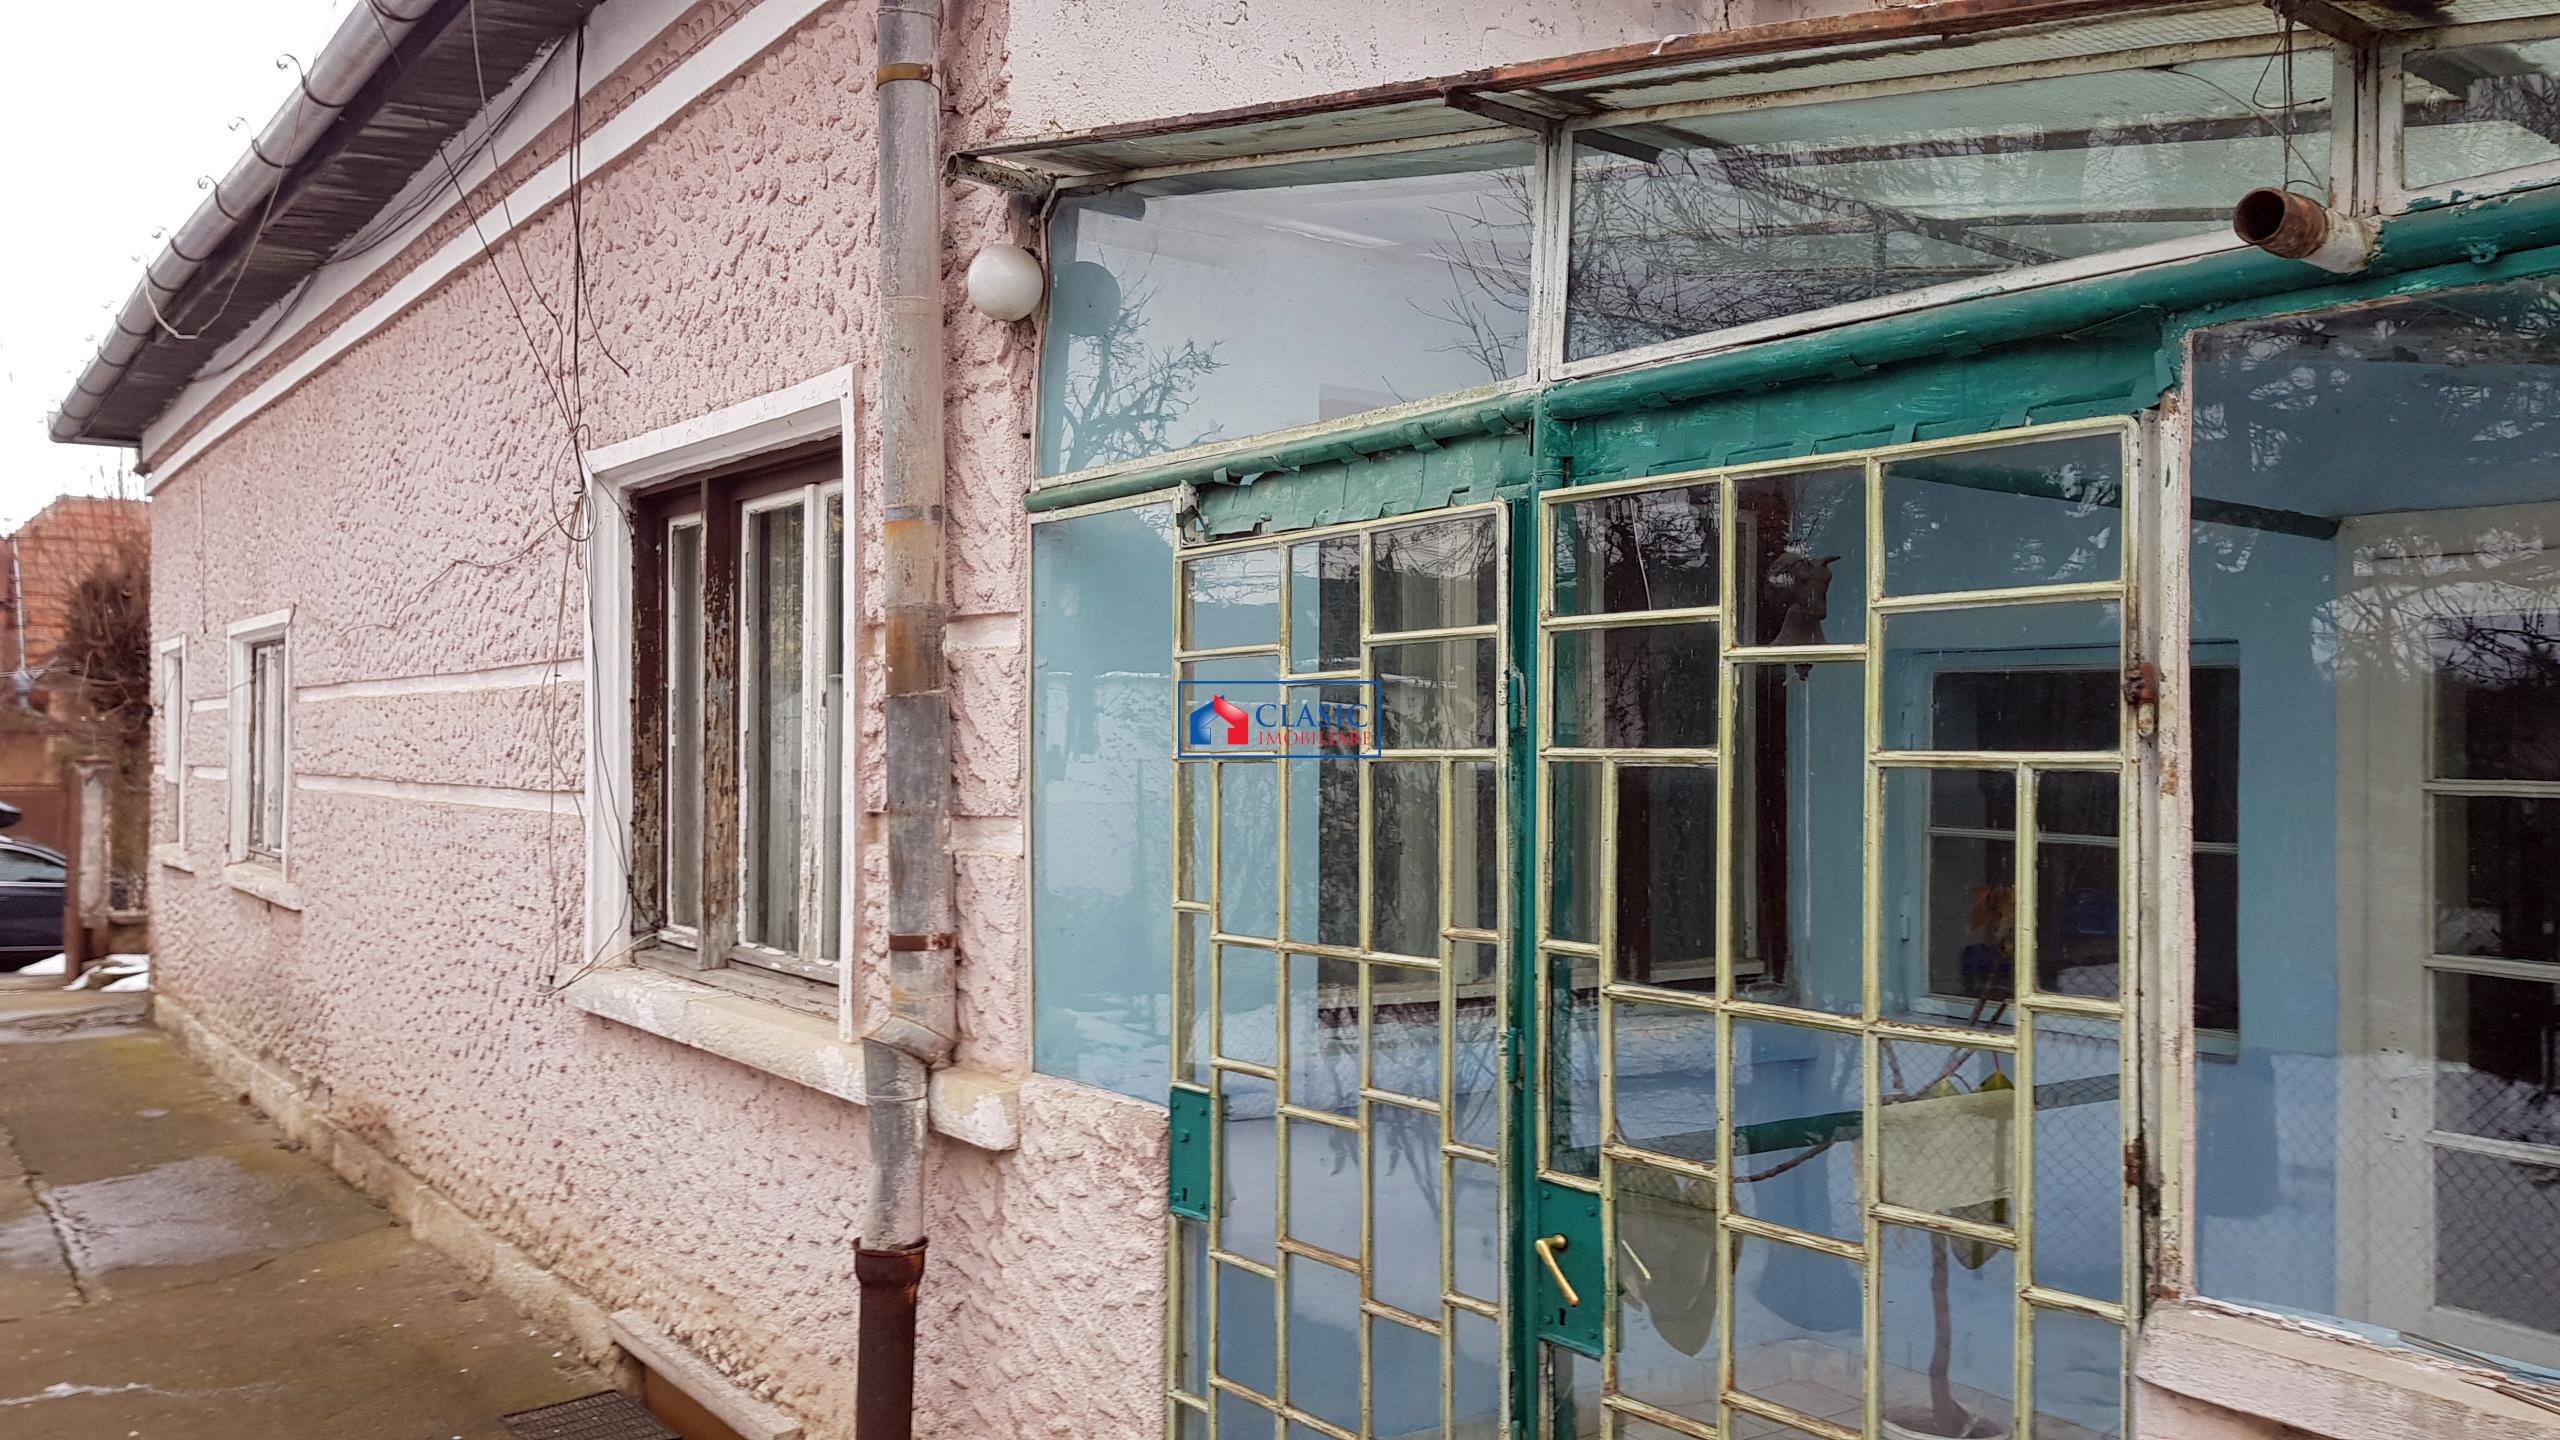 Vanzare casa individuala veche, zona Gheorgheni, Cluj Napoca